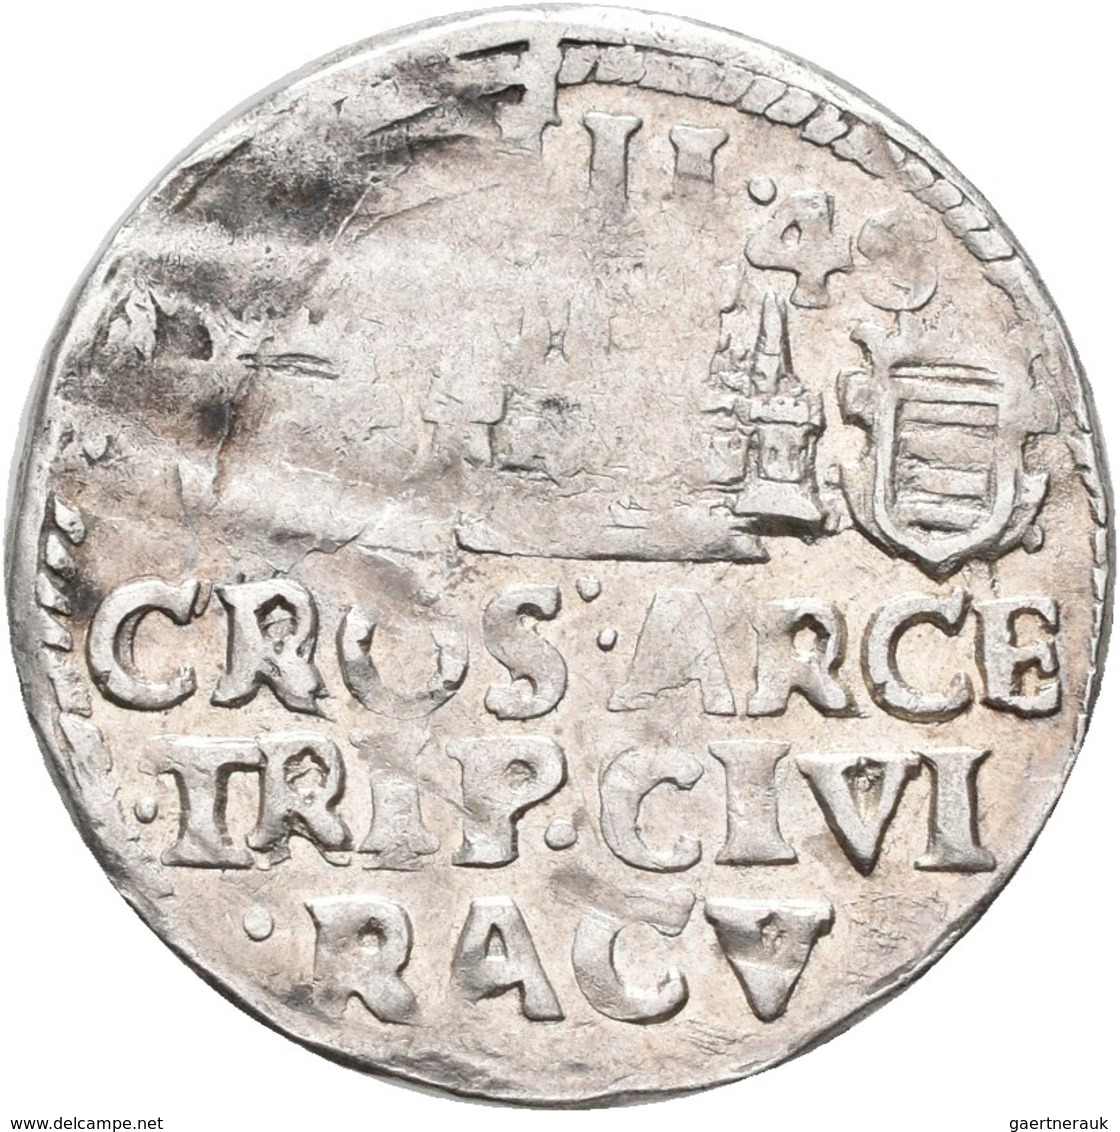 Kroatien: Republik Ragusa: 3 Gröscher (Artiluk) 1645. Brustbild Des Hl. Blasius. RACVSII ** LASIUS / - Croacia